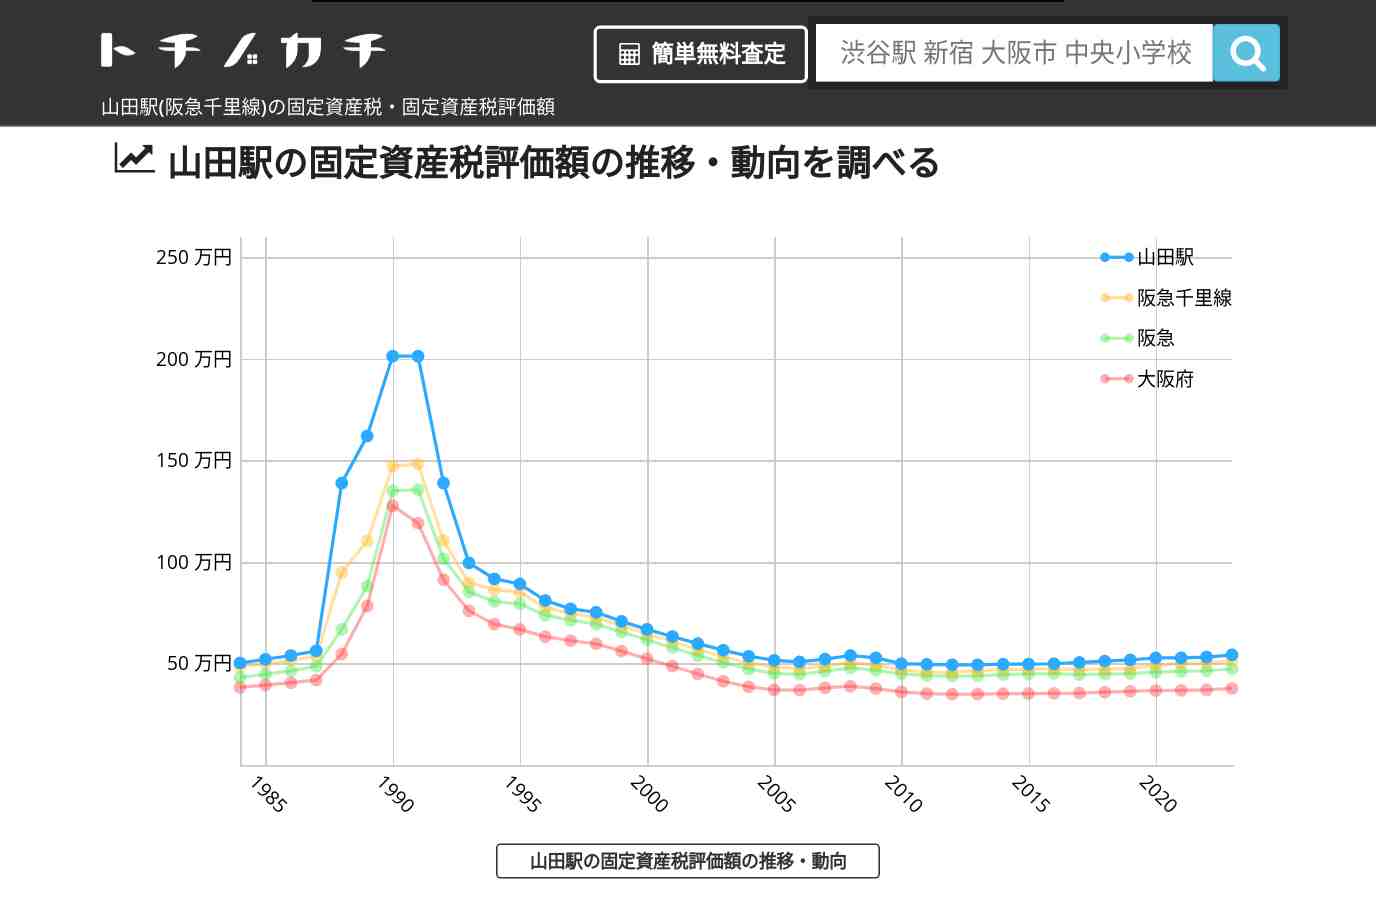 山田駅(阪急千里線)の固定資産税・固定資産税評価額 | トチノカチ